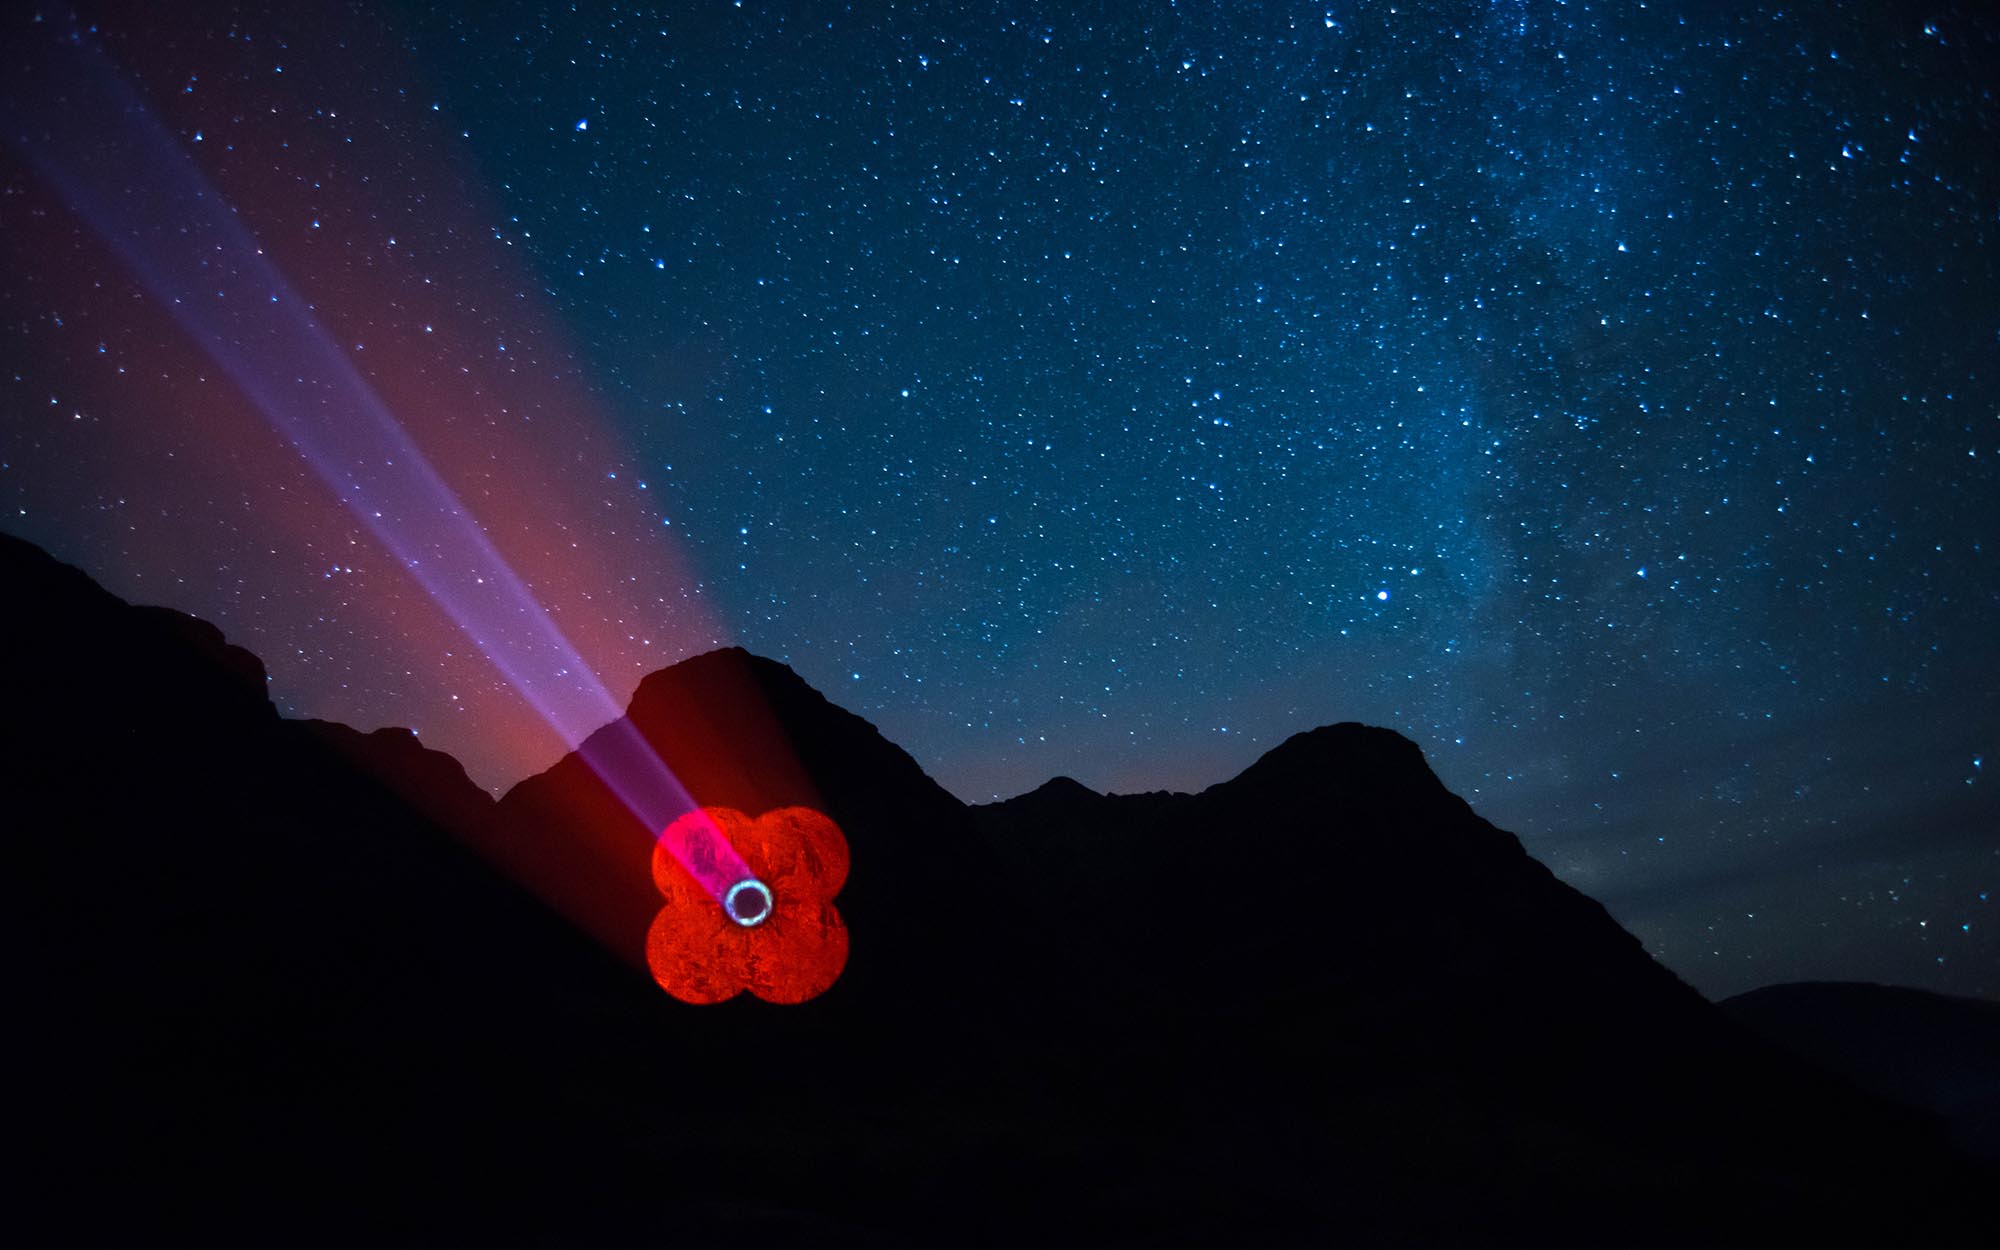 Poppy Scotland logo projected onto Mountain in Glencoe